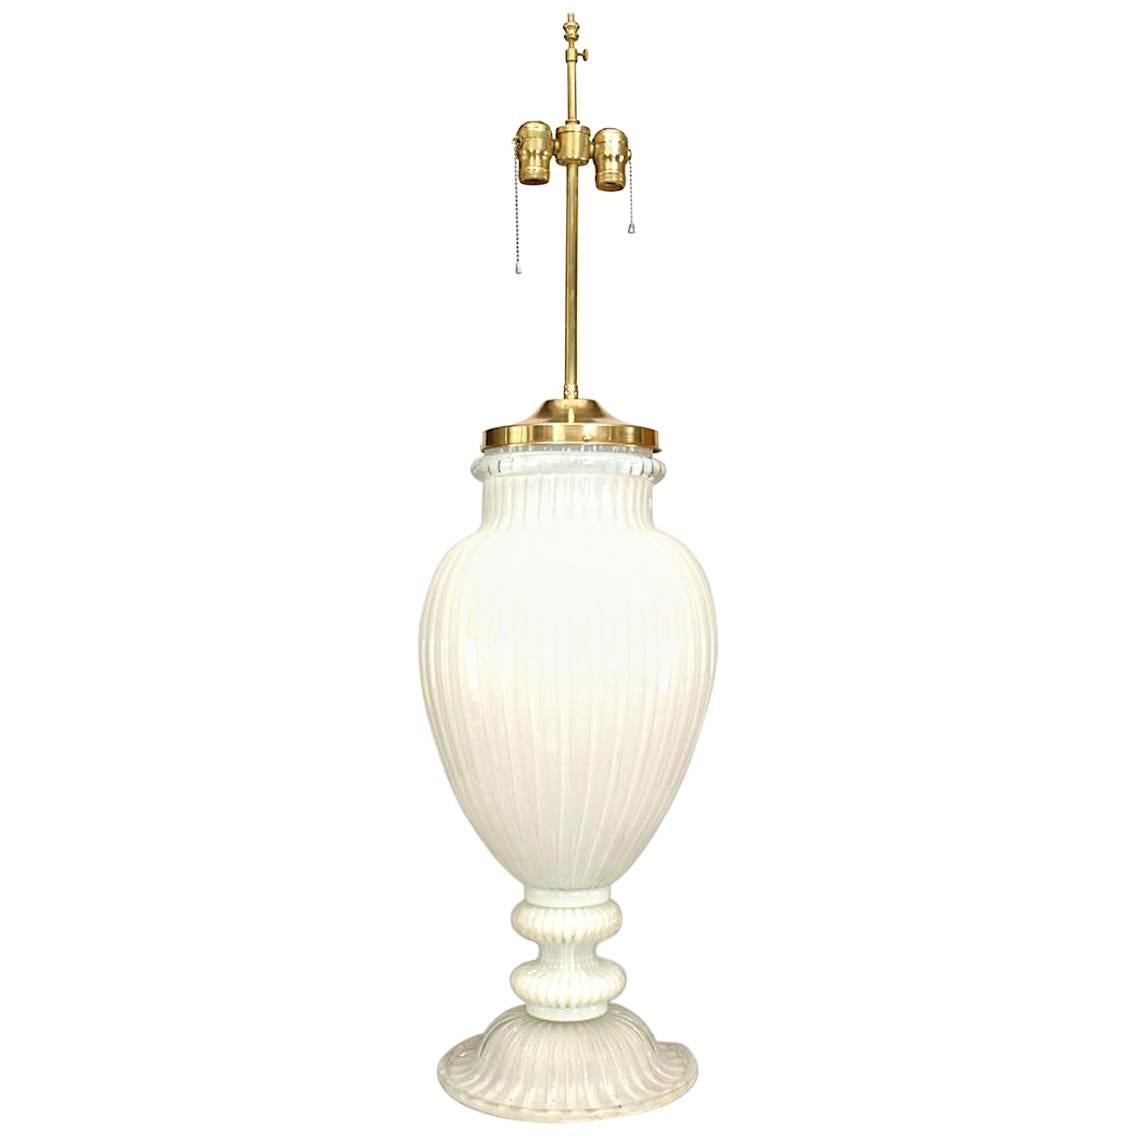 Italian Neoclassic Murano Urn Table Lamp For Sale